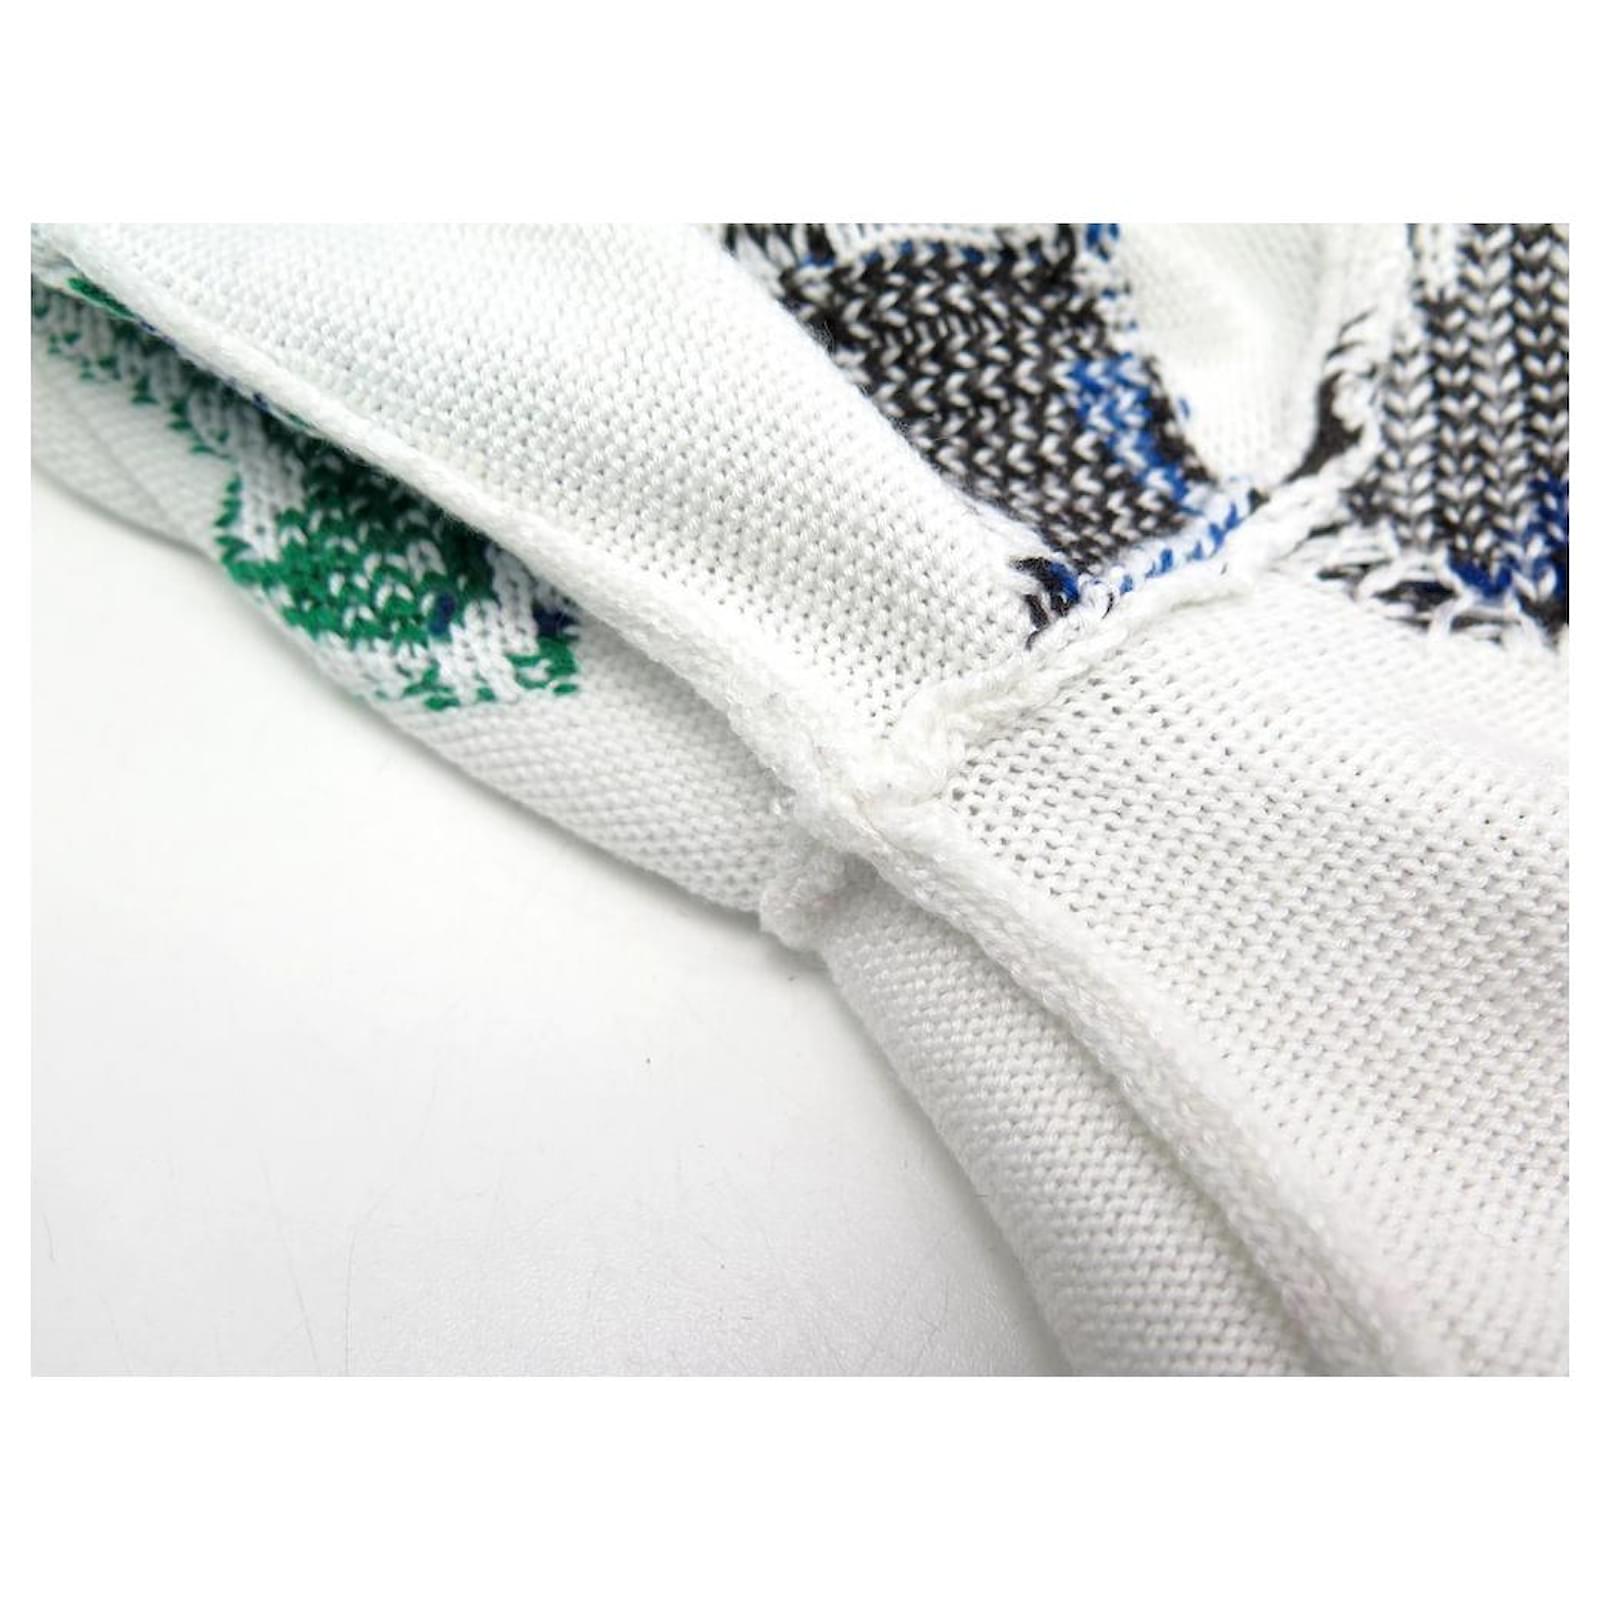 Wool sweatshirt Louis Vuitton X NBA White size L International in